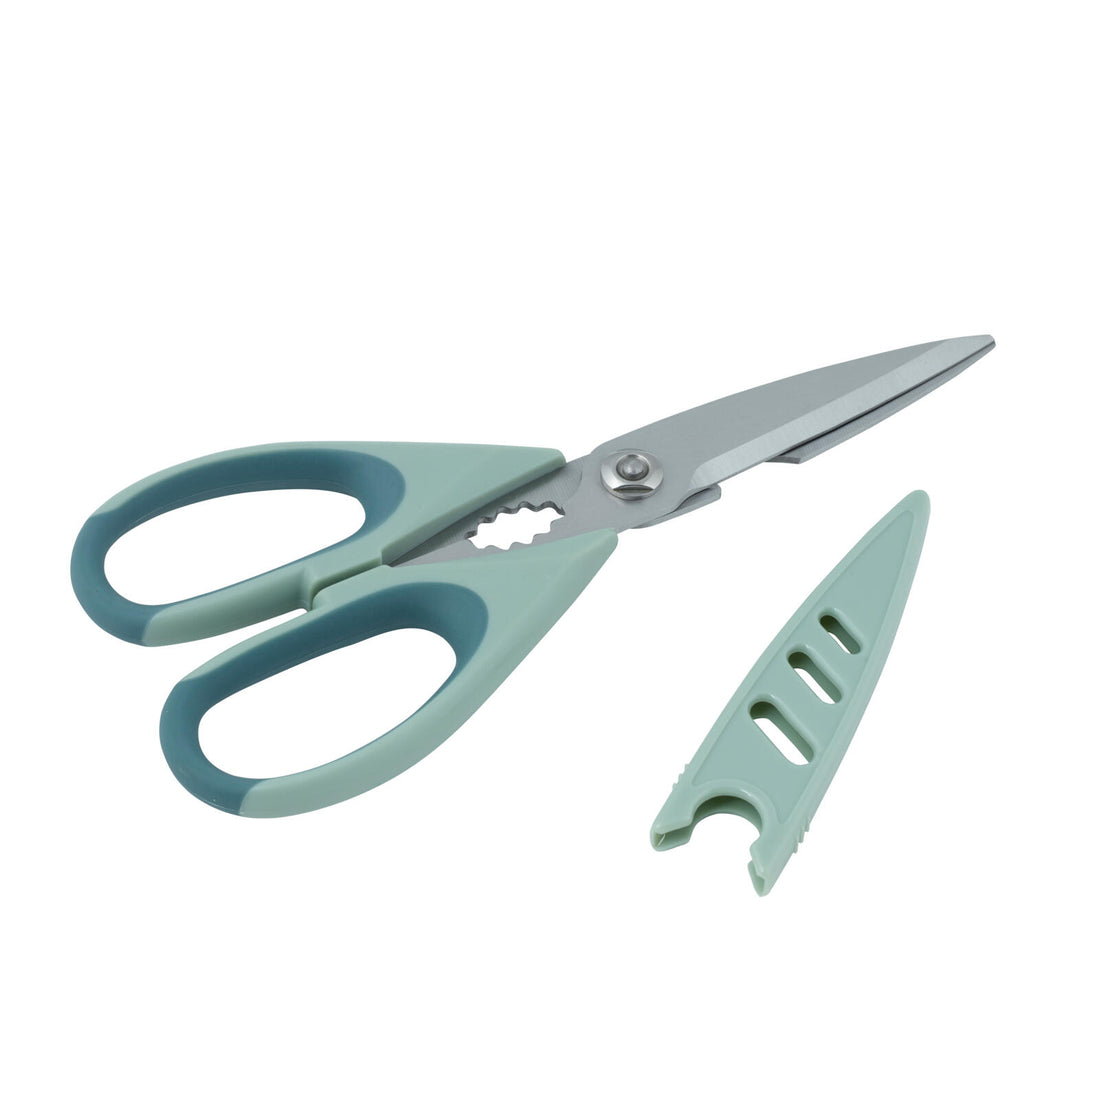 CUISINO Mint scissors, L 22 x D 2.5 cm